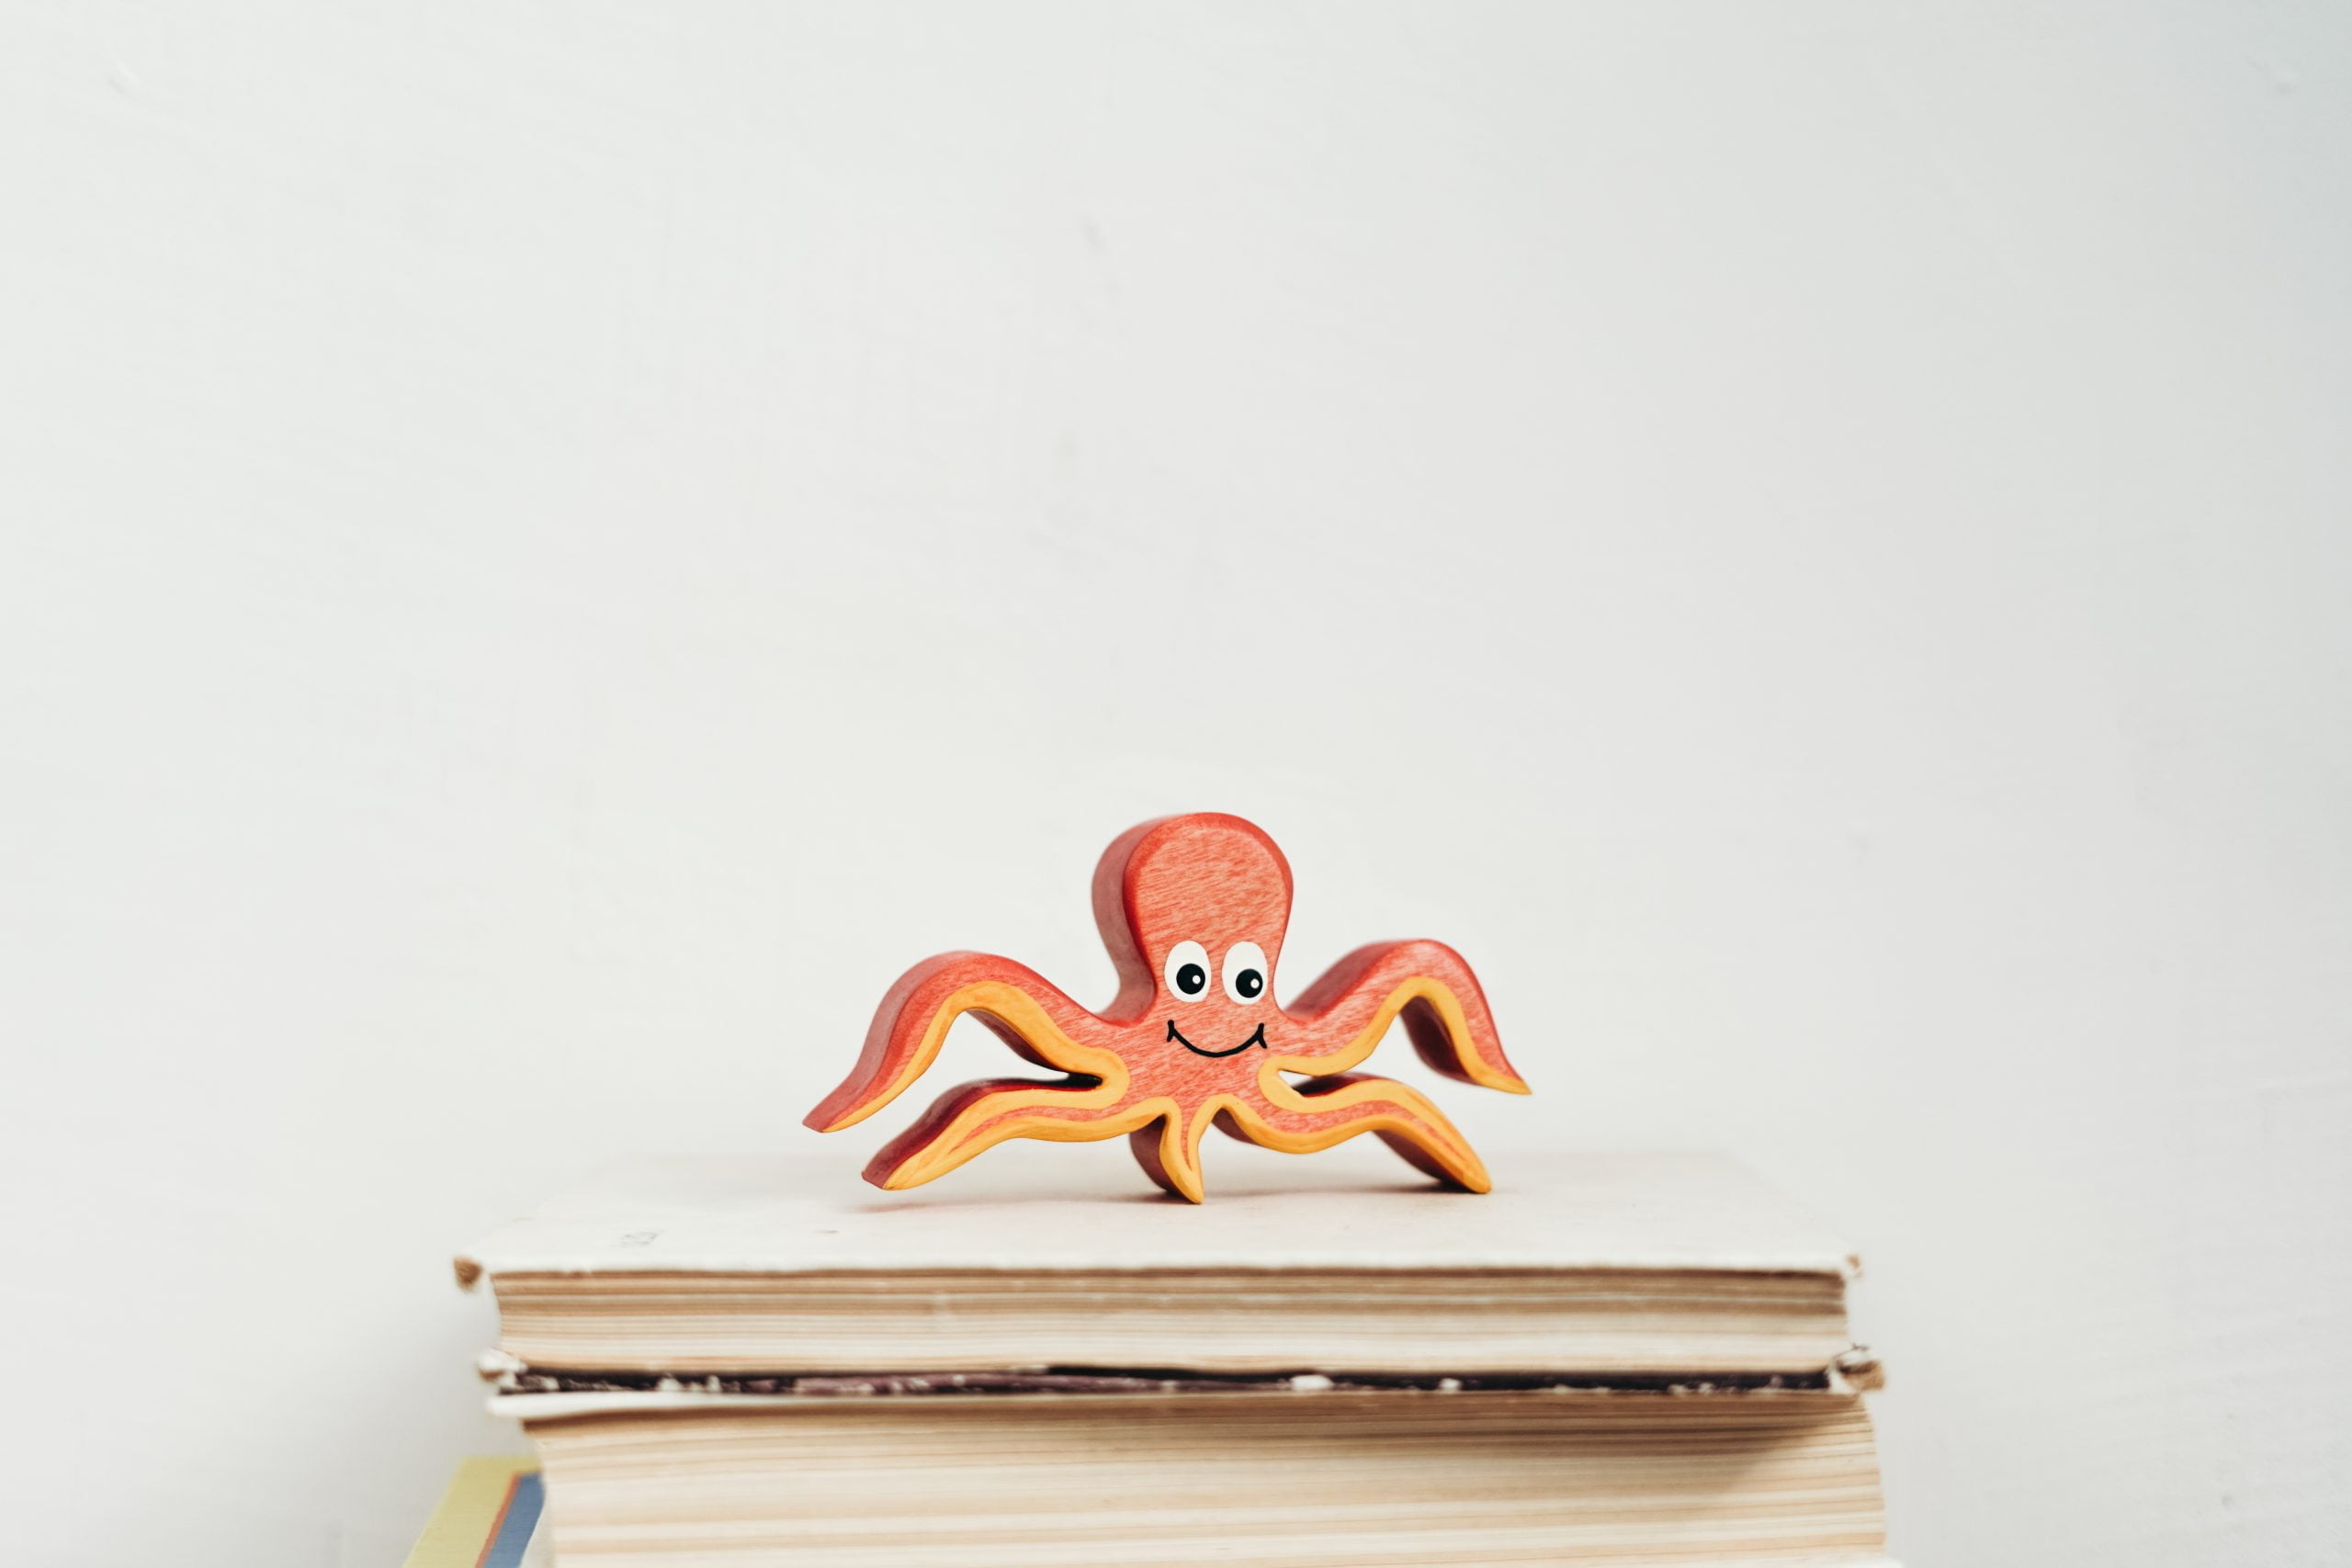 Wooden octopus figurine on book